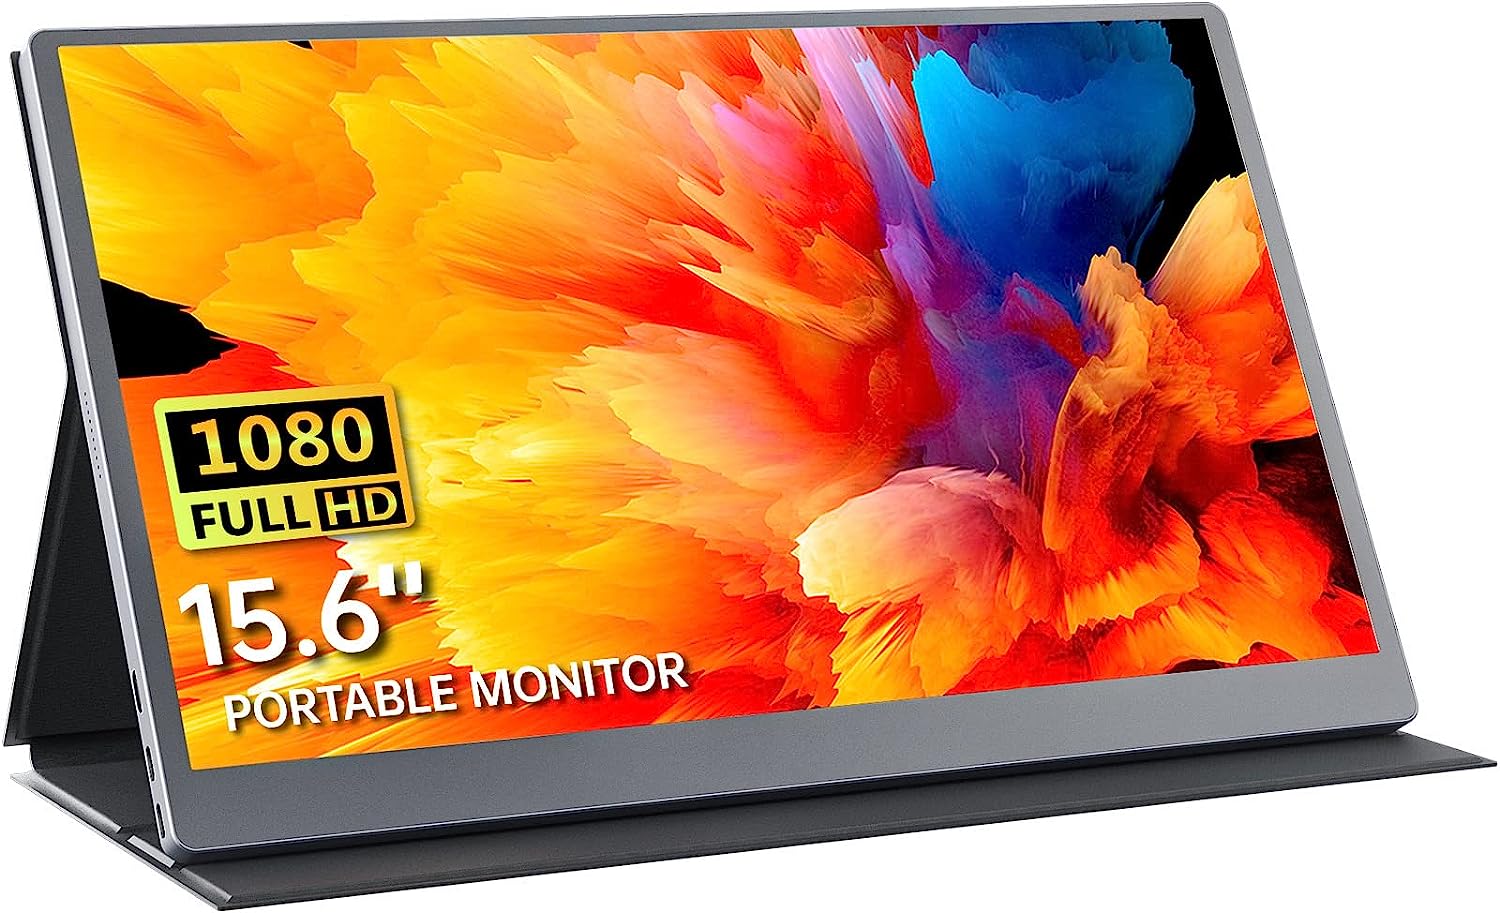 Upperizon Portable Monitor 15.6 Inch 1080P IPS Travel [...]